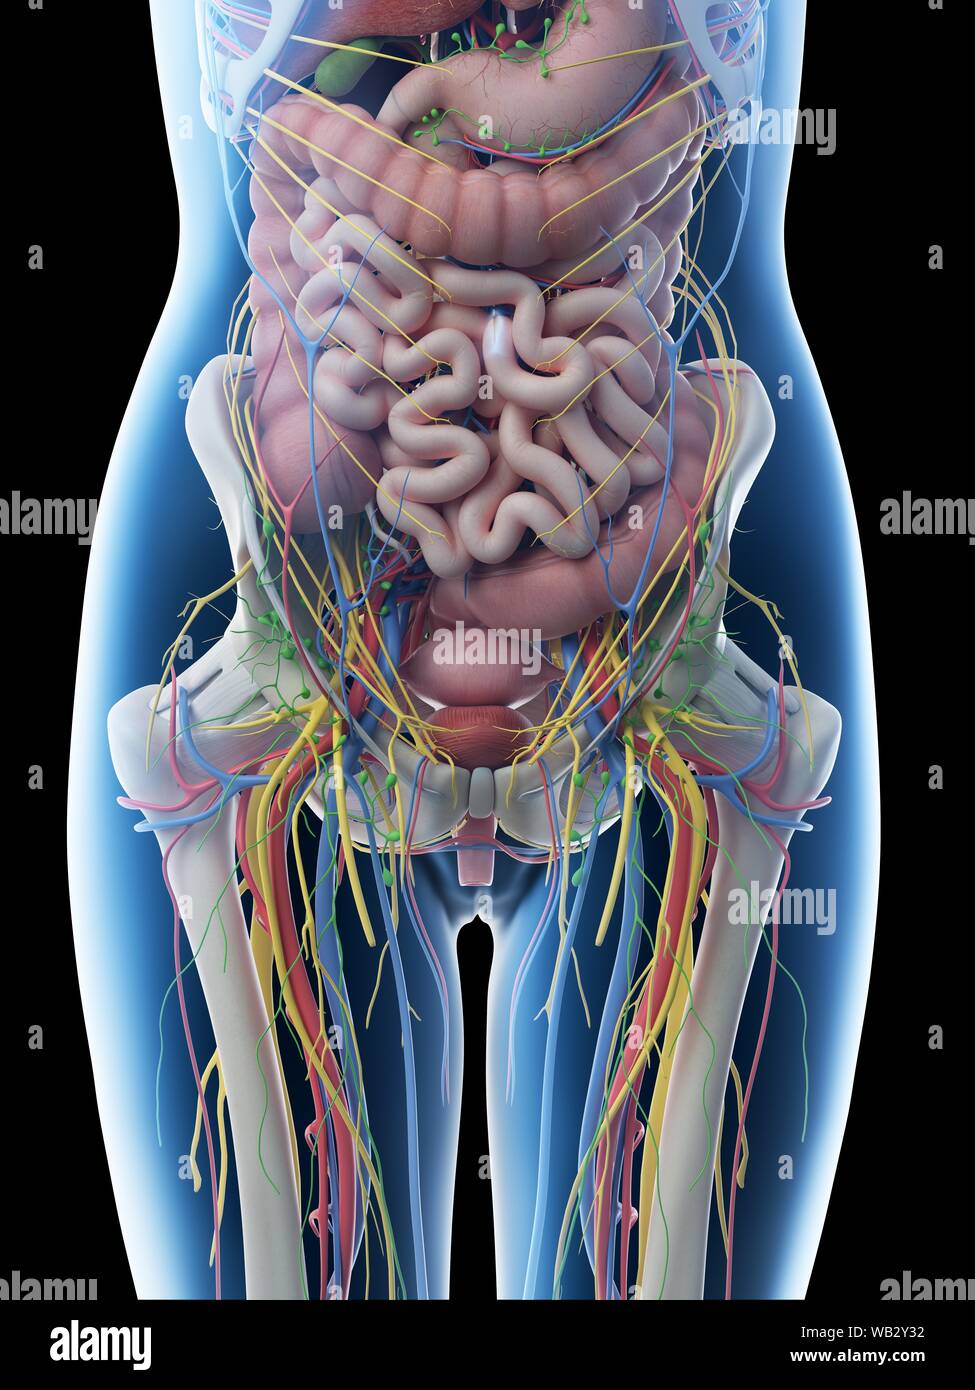 Female abdominal anatomy, computer illustration Stock Photo - Alamy